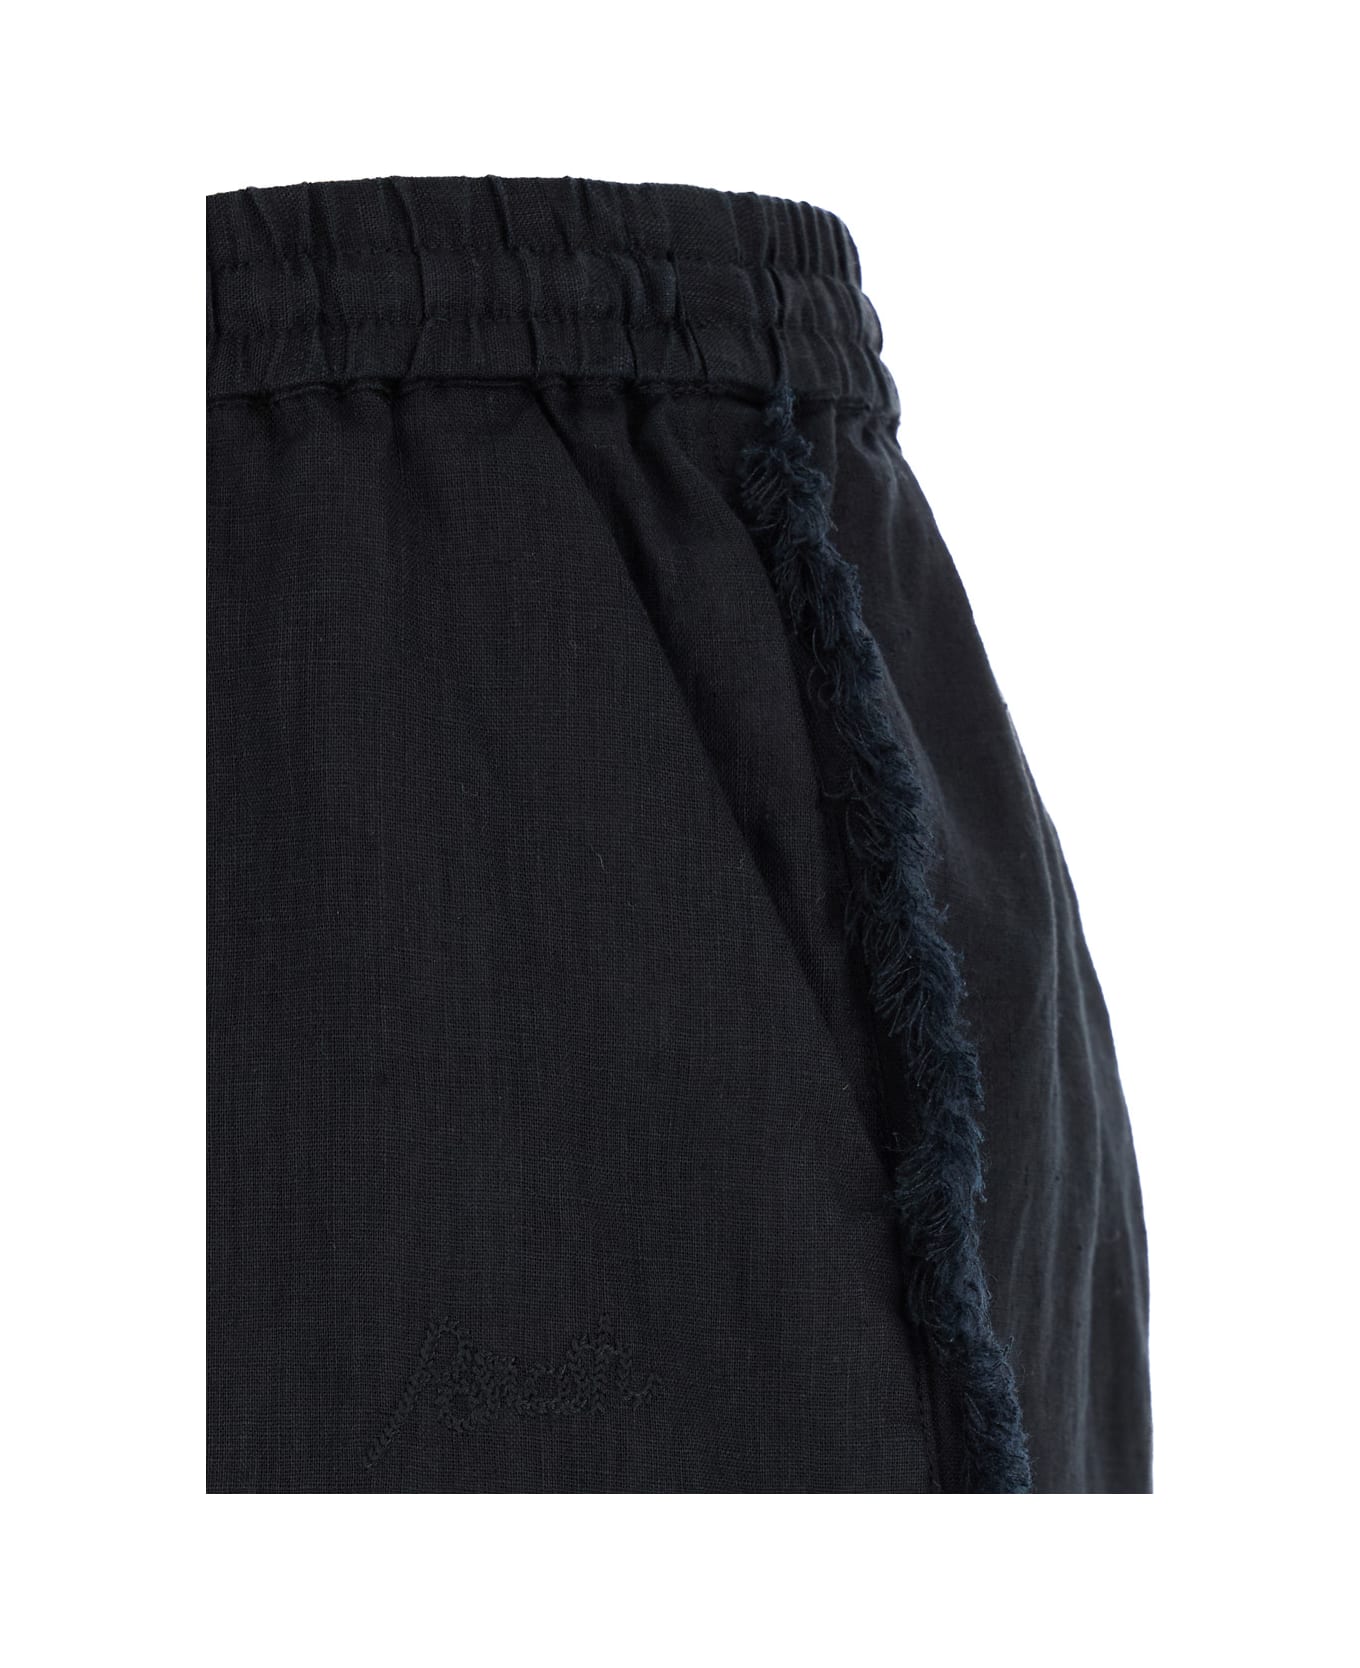 Parosh Black Shorts With Drawstring And Fringed Hem In Linen Woman - Black ショートパンツ